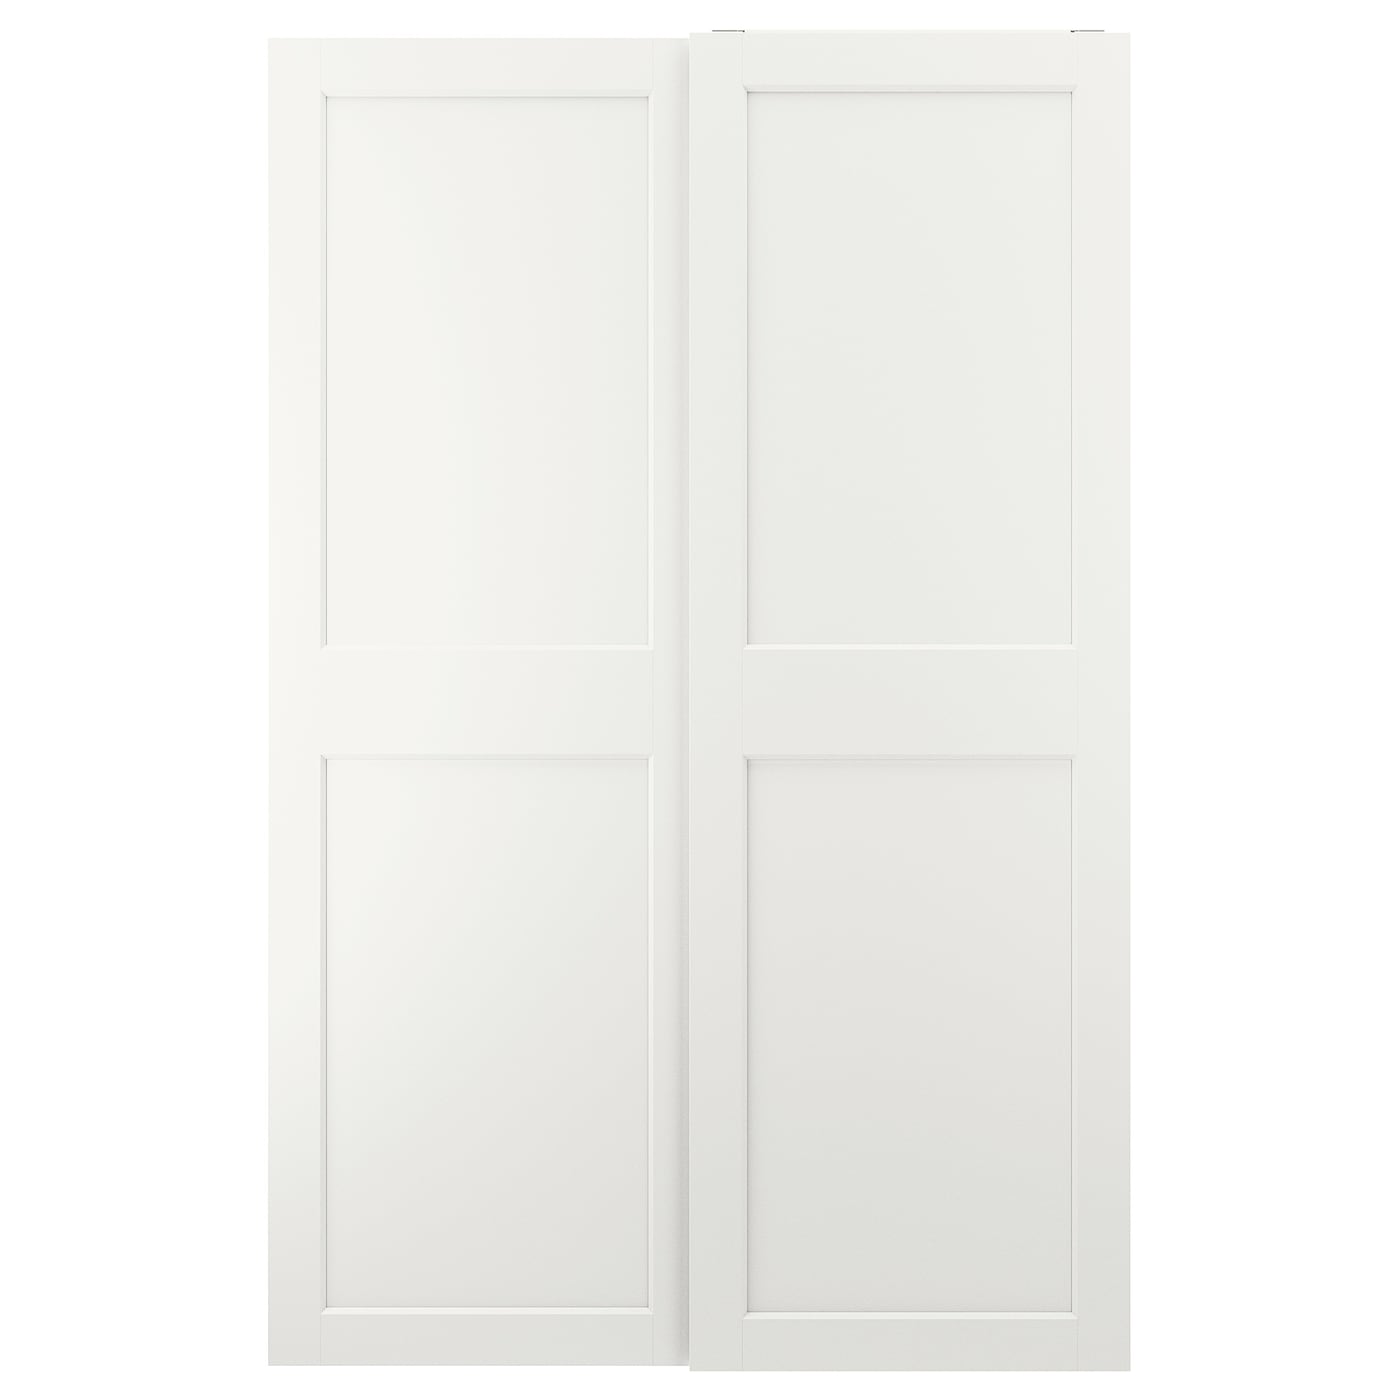 Пара рам раздвижных дверей - GRIMO IKEA/ ГРИМО ИКЕА, 150х236 см, белый